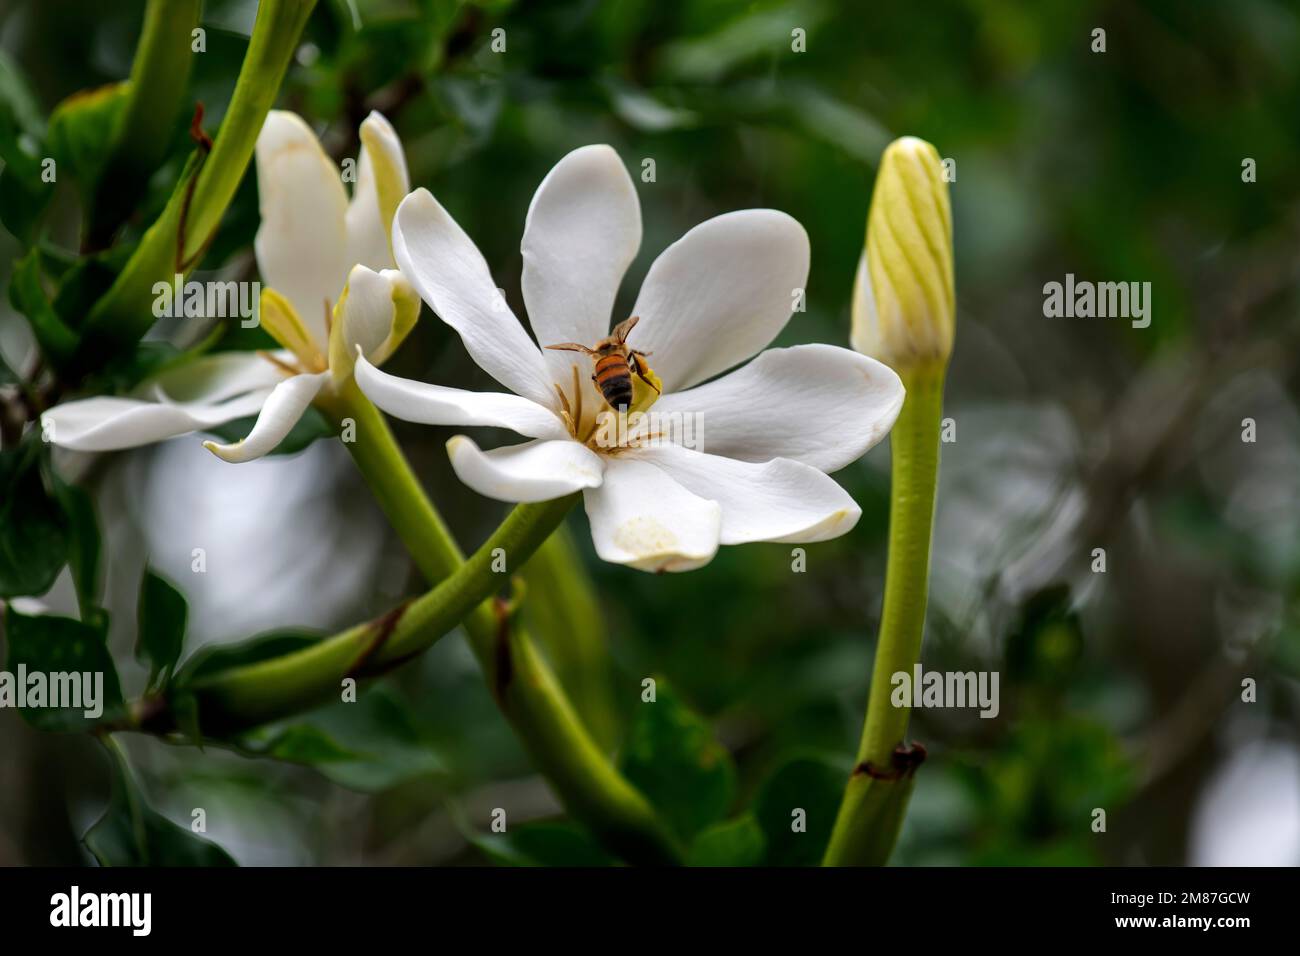 Bee sitting on a White Gardenia flower at a backyard in Sydney, New South Wales, Australia (Photo by Tara Chand Malhotra) Stock Photo